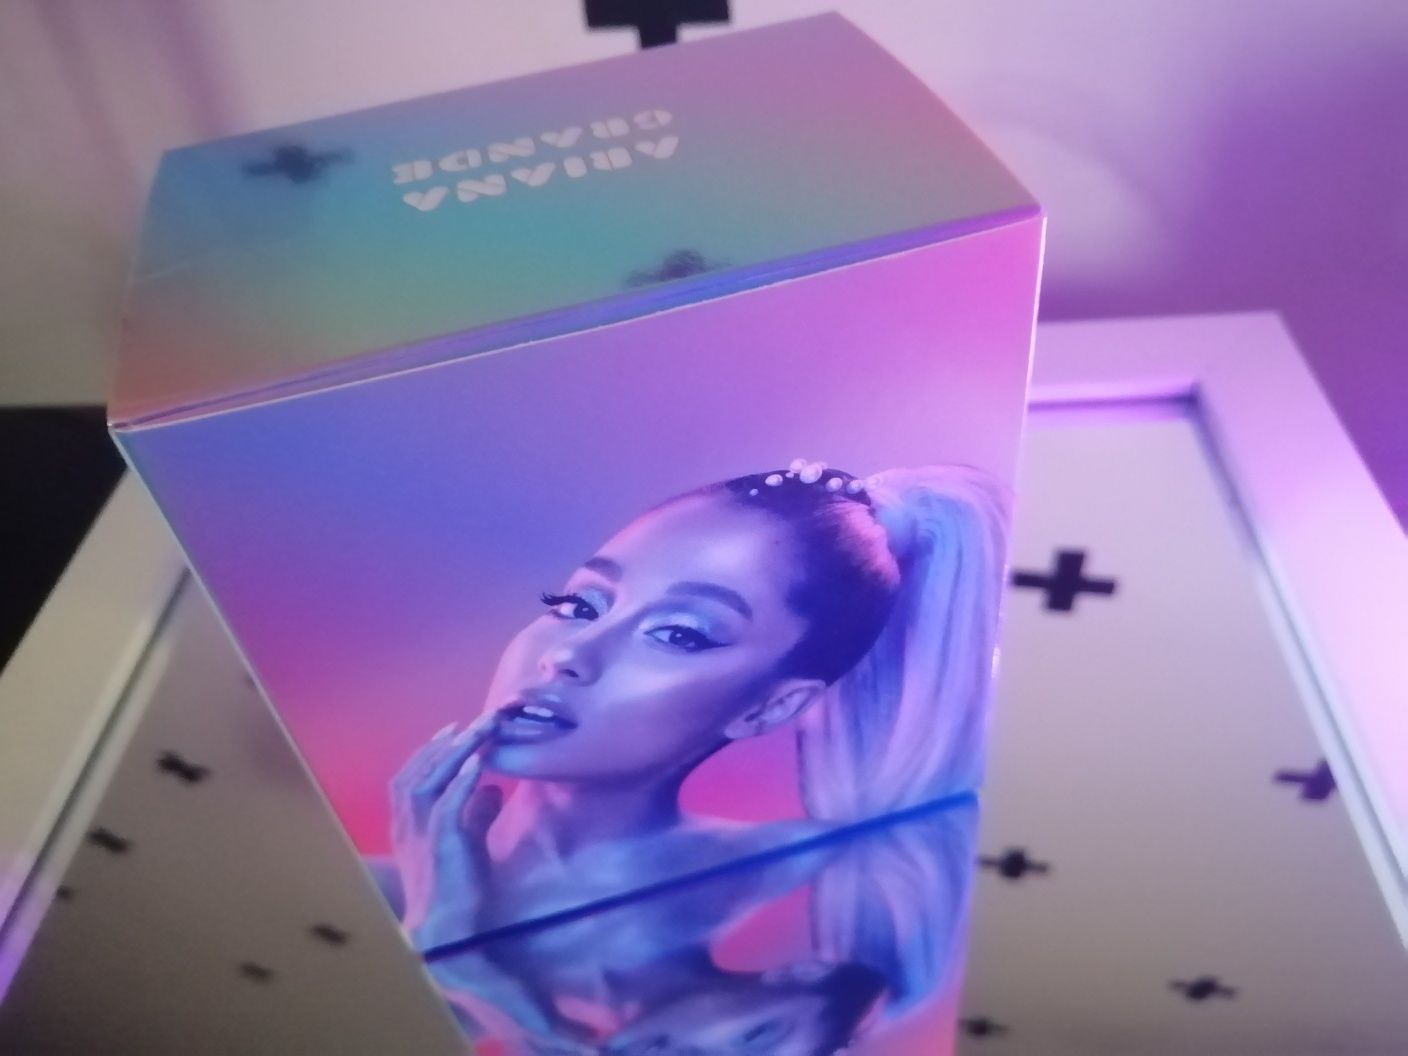 Pudełko Cloud Ariana Grande